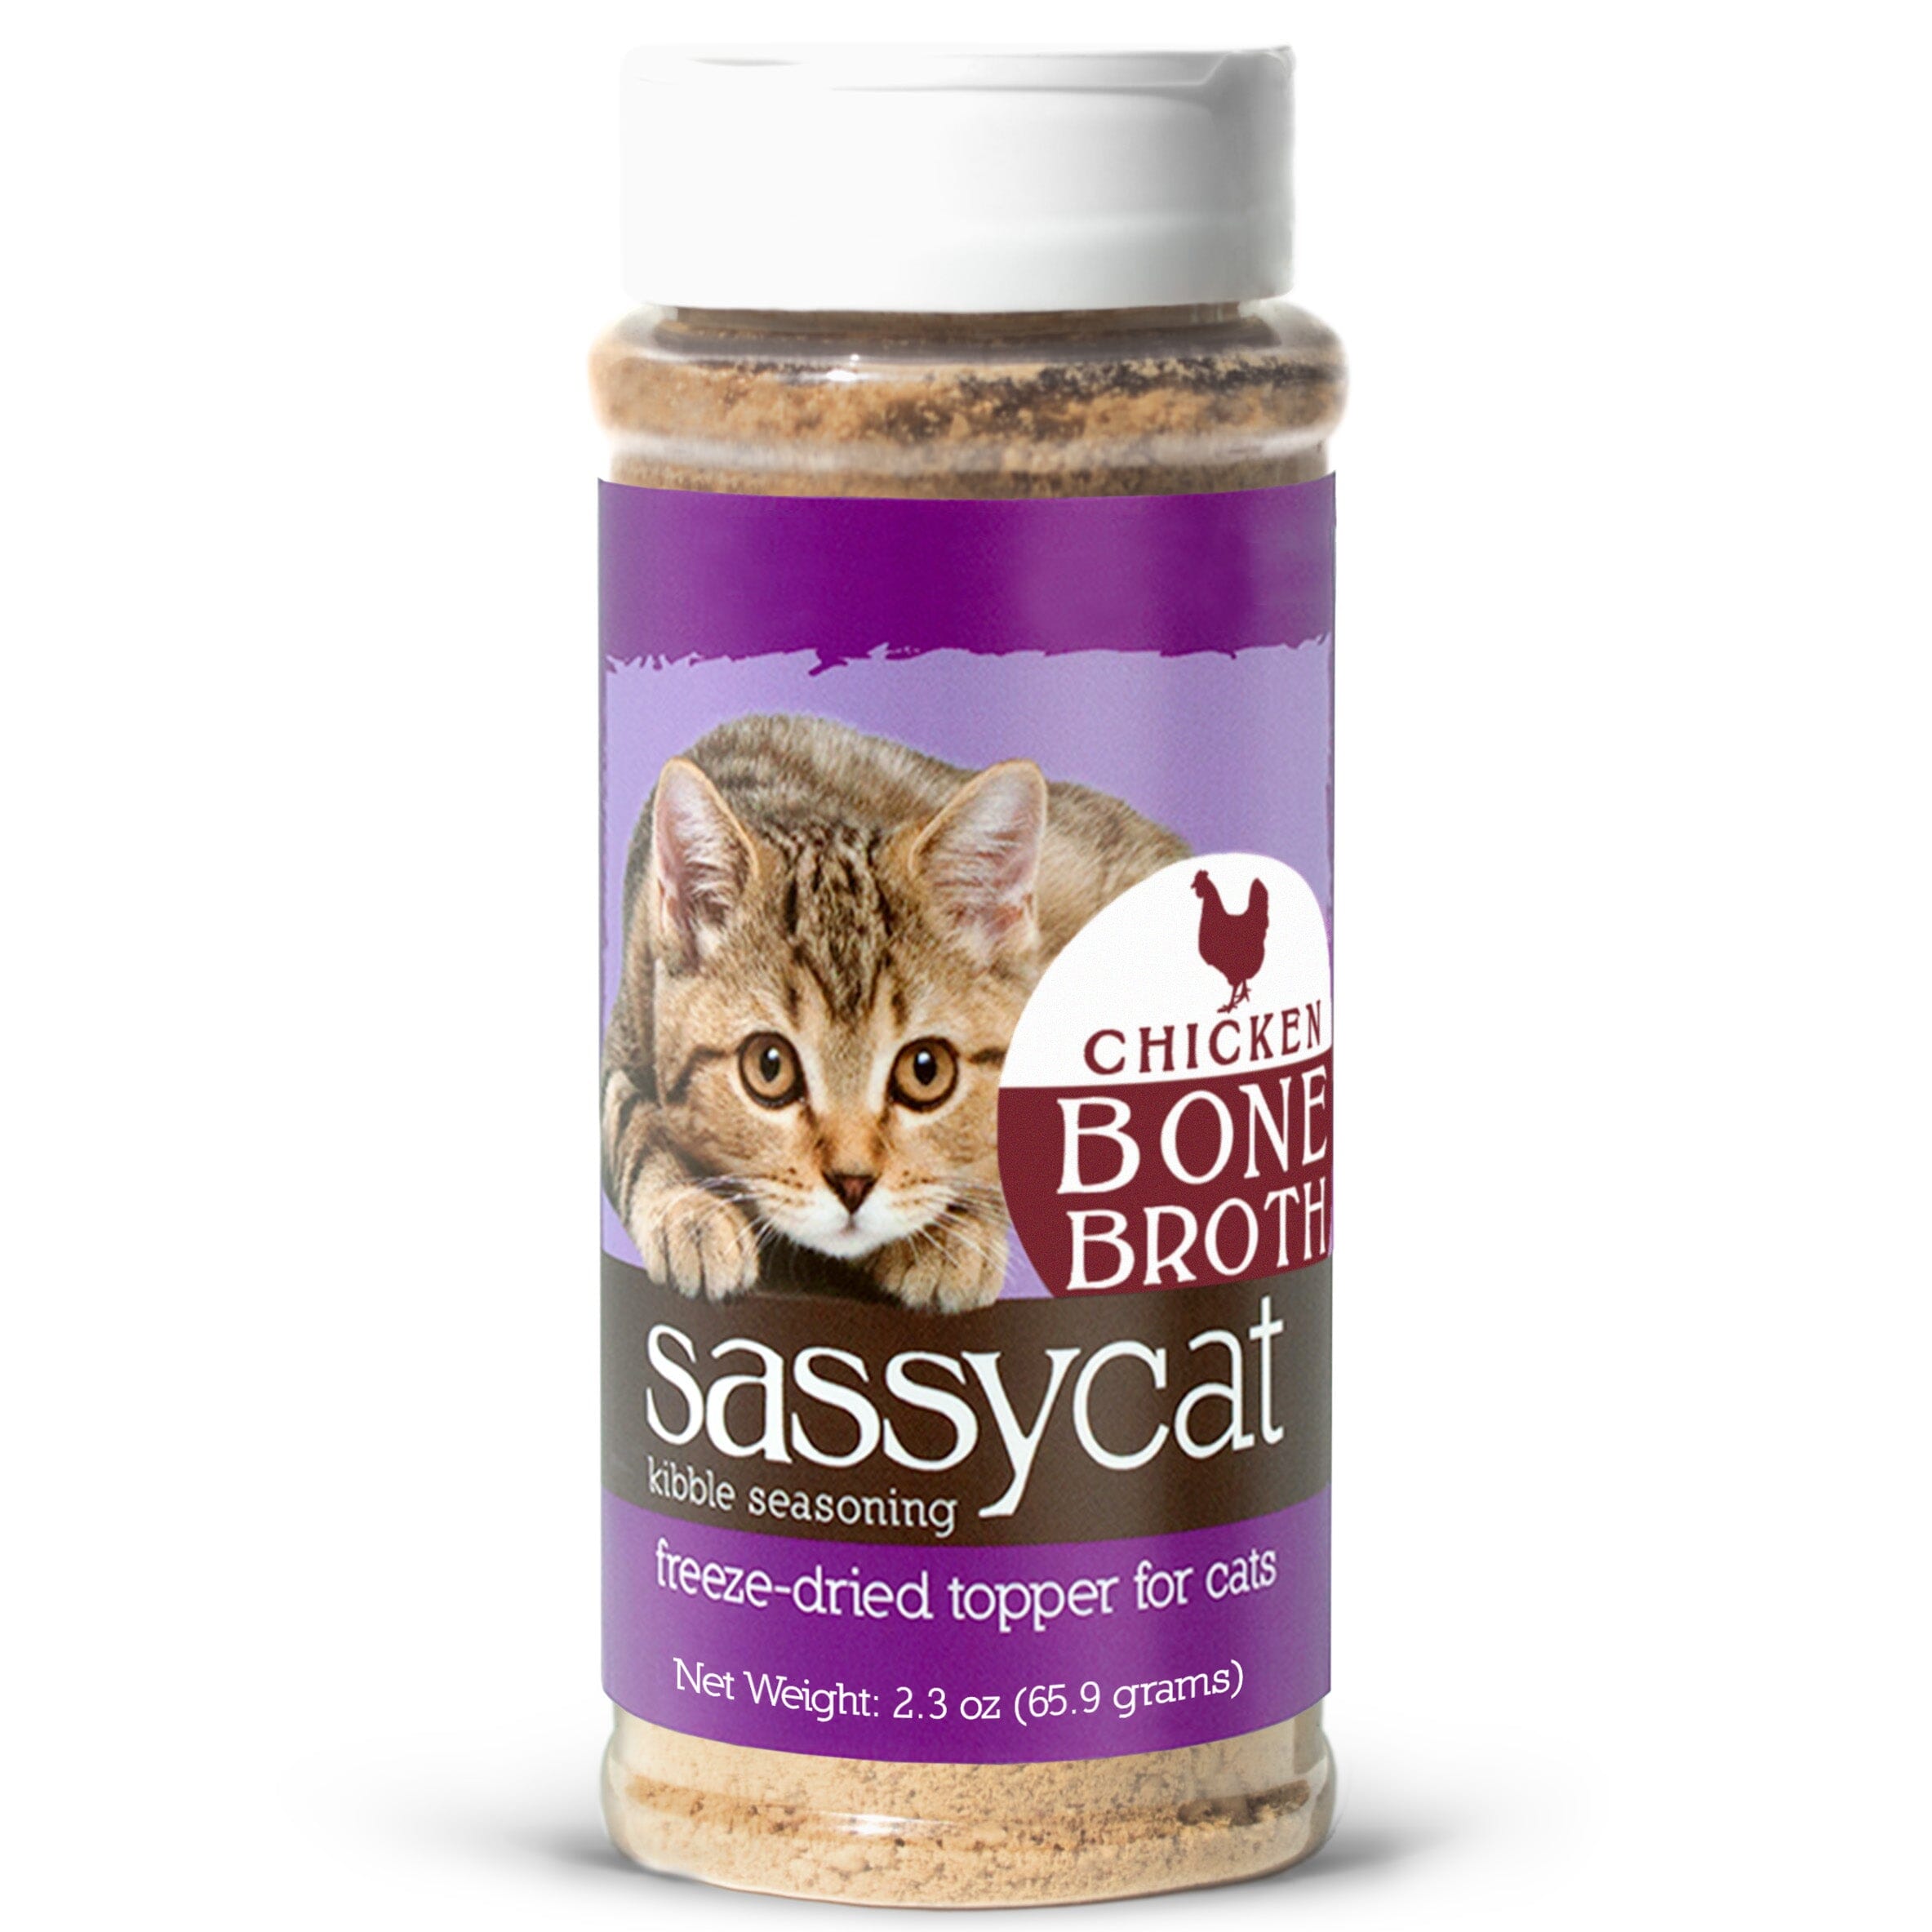 Herbsmith Sassy Cat Kibble Seasoning (4 Pack)